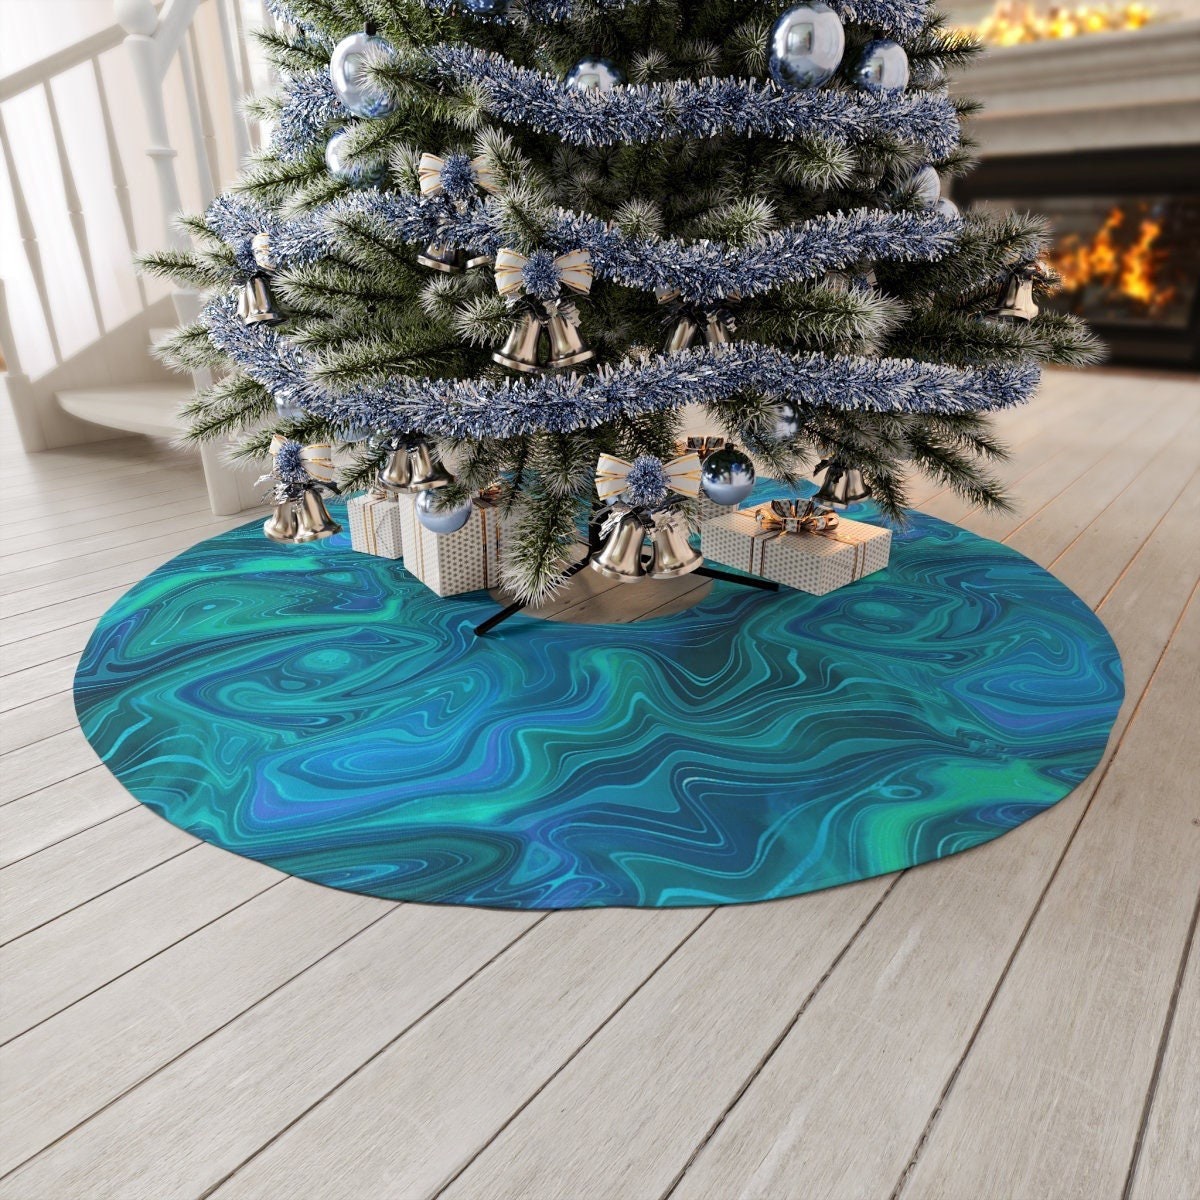 Coastal Christmas Aqua Blue Turquoise Gold Silver Plastic Tree Ornaments  Decor